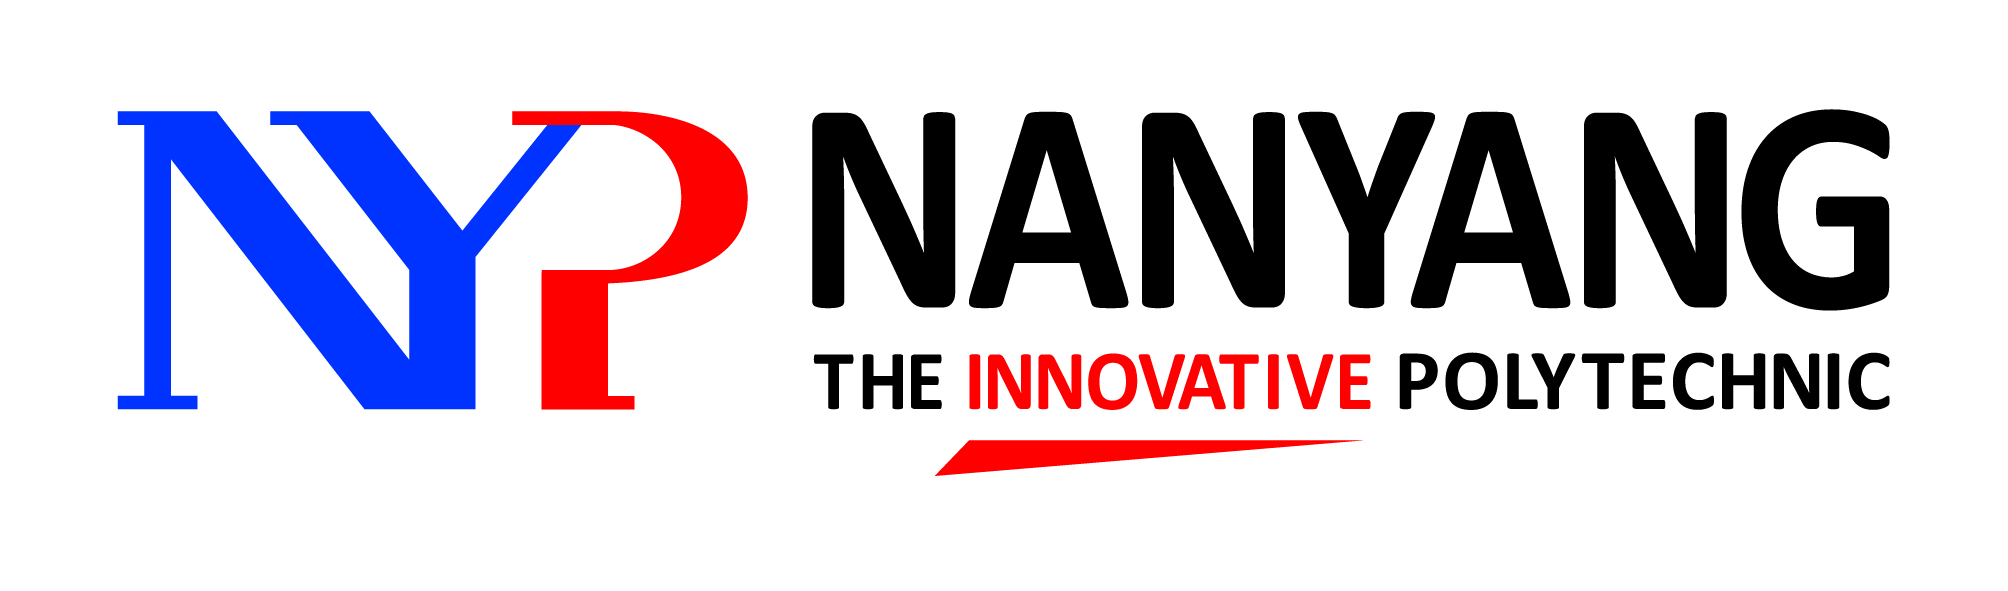 Nanyang Polytechnic logo - Oxford Graphic